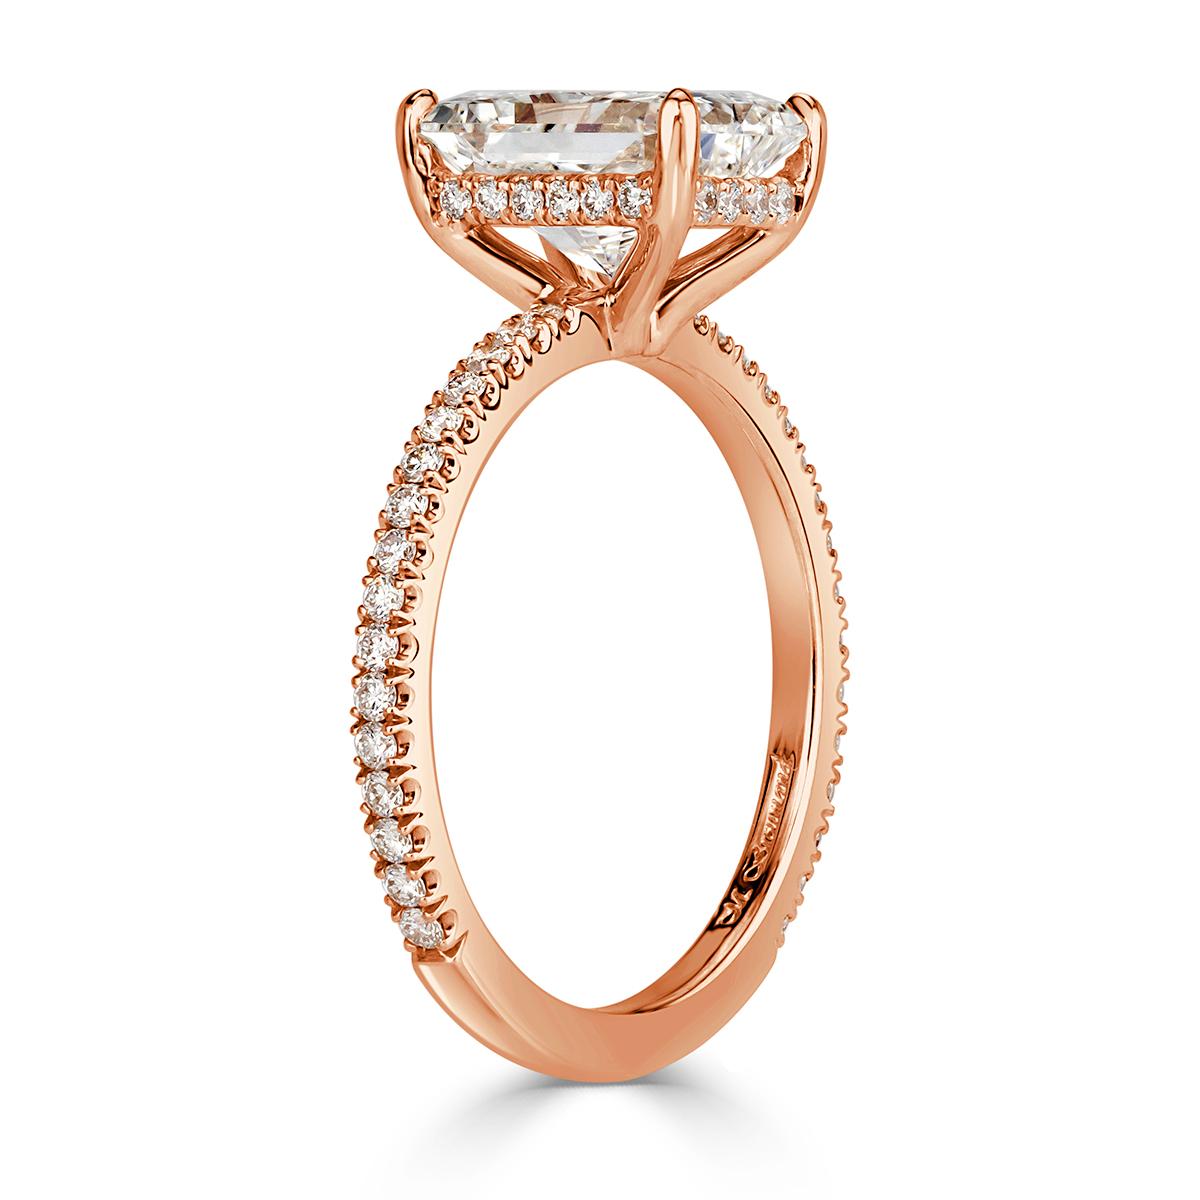 Women's or Men's Mark Broumand 2.82 Carat Radiant Cut Diamond Engagement Ring